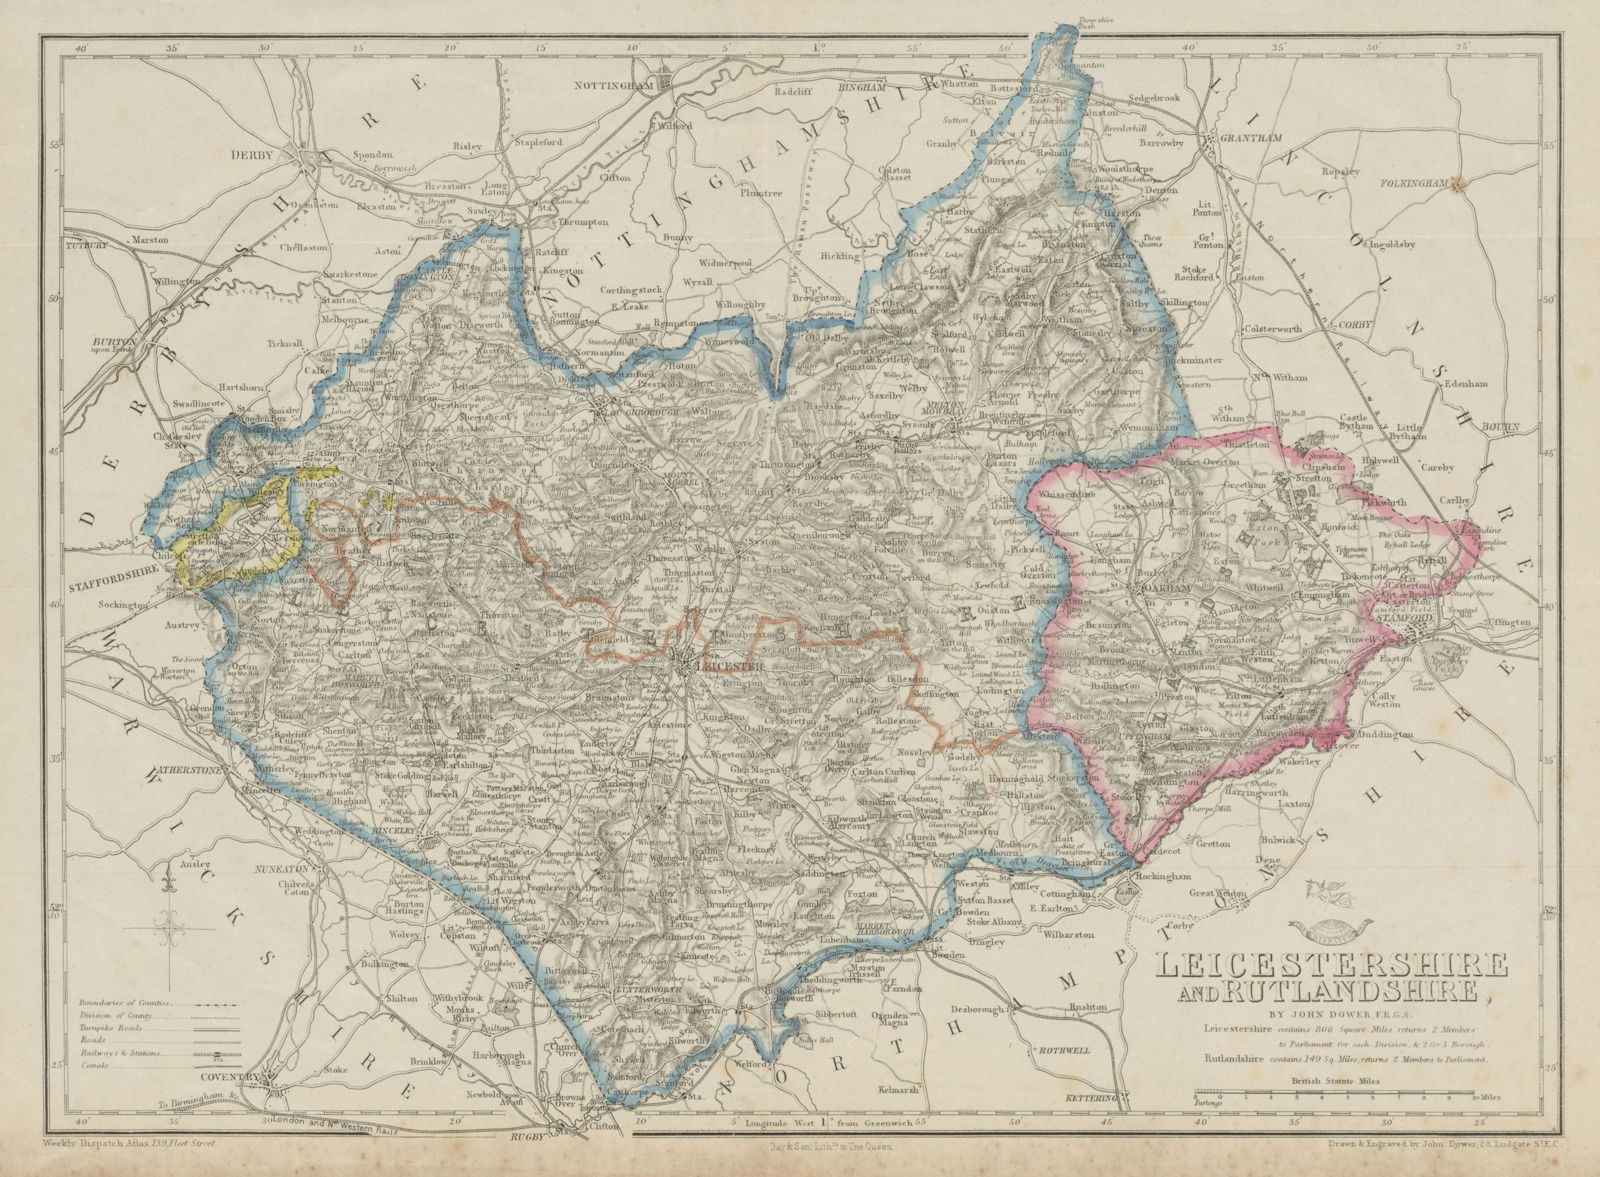 EAST MIDLANDS. Leicestershire & Rutlandshire. Railways Enclaves. DOWER 1862 map